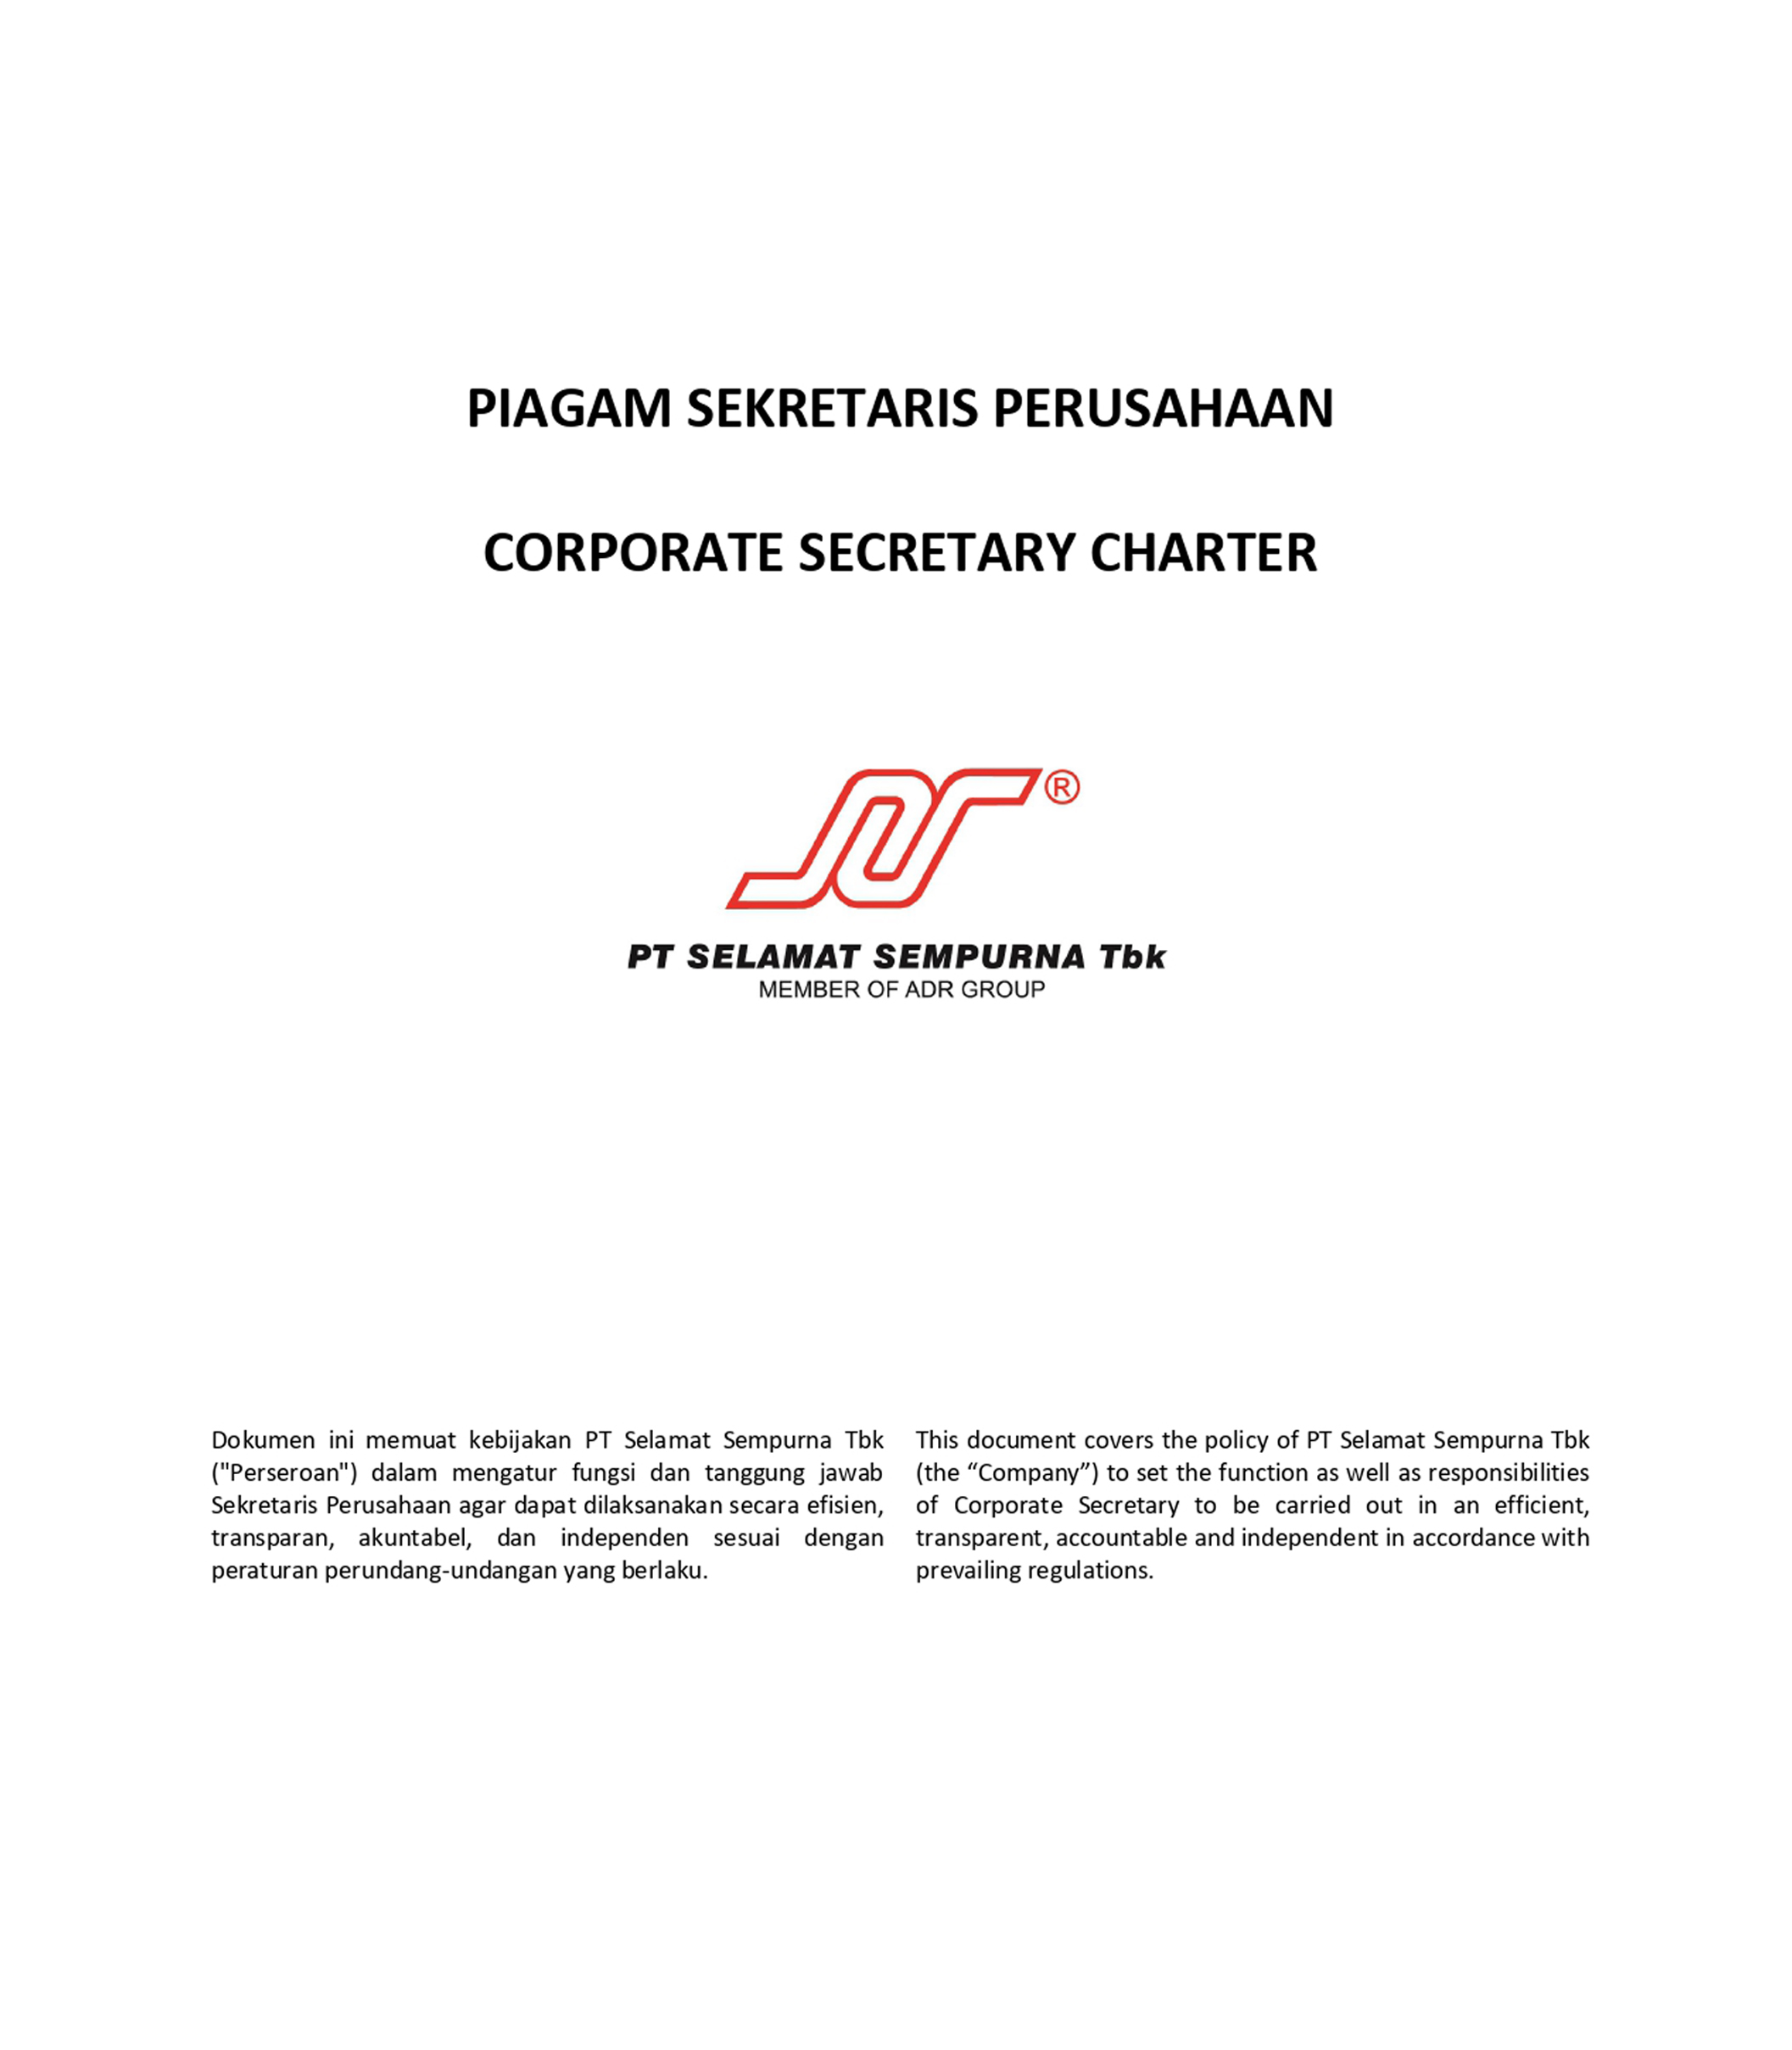 Corporate Secretary Charter